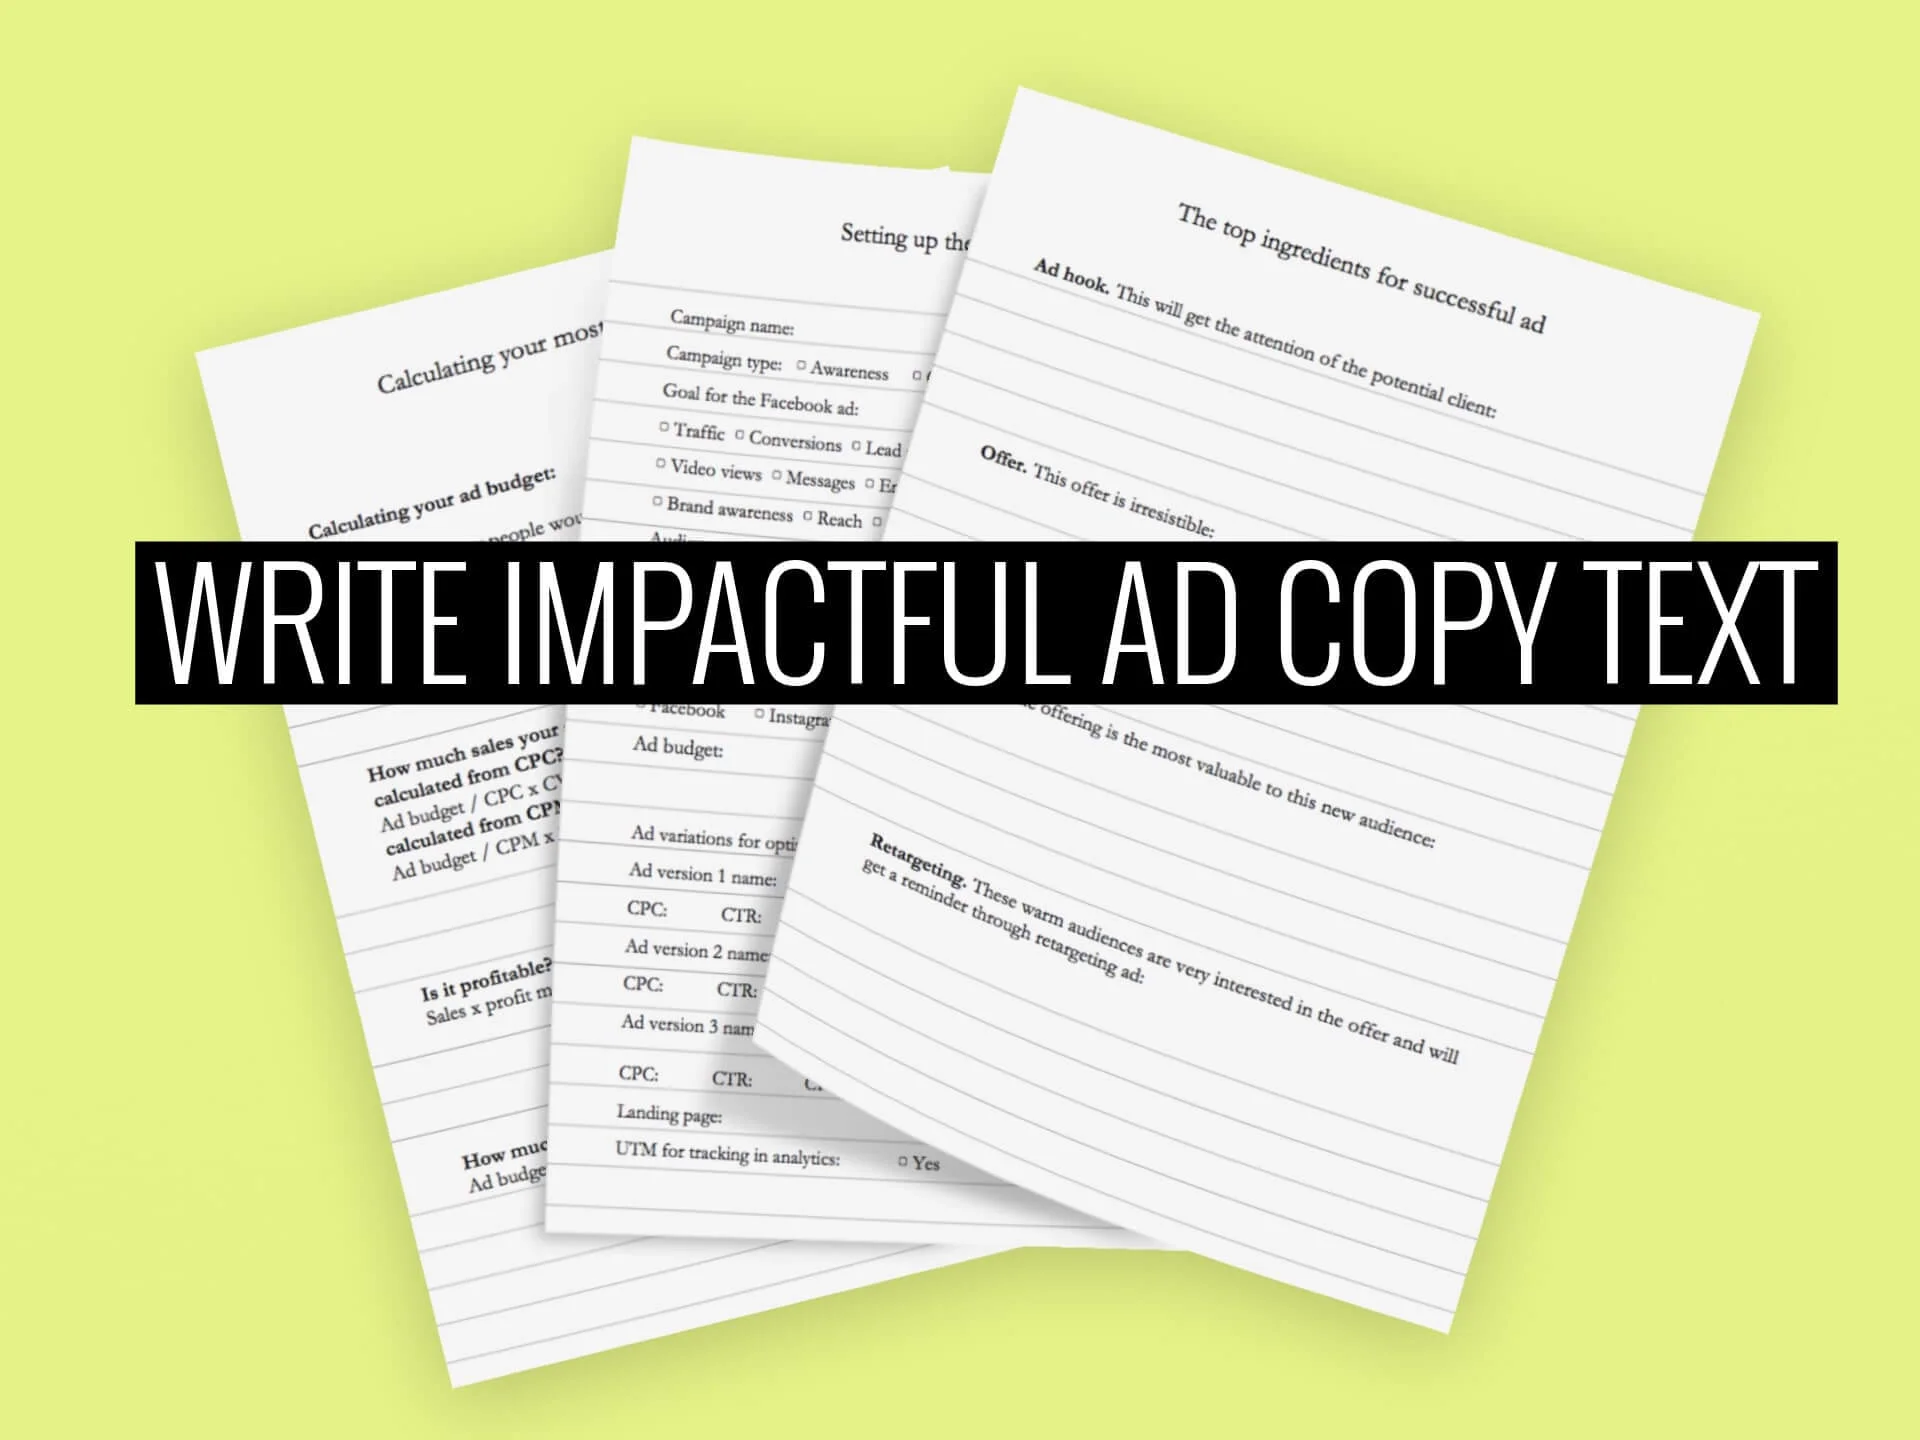 Write impactful Facebook ad copy text